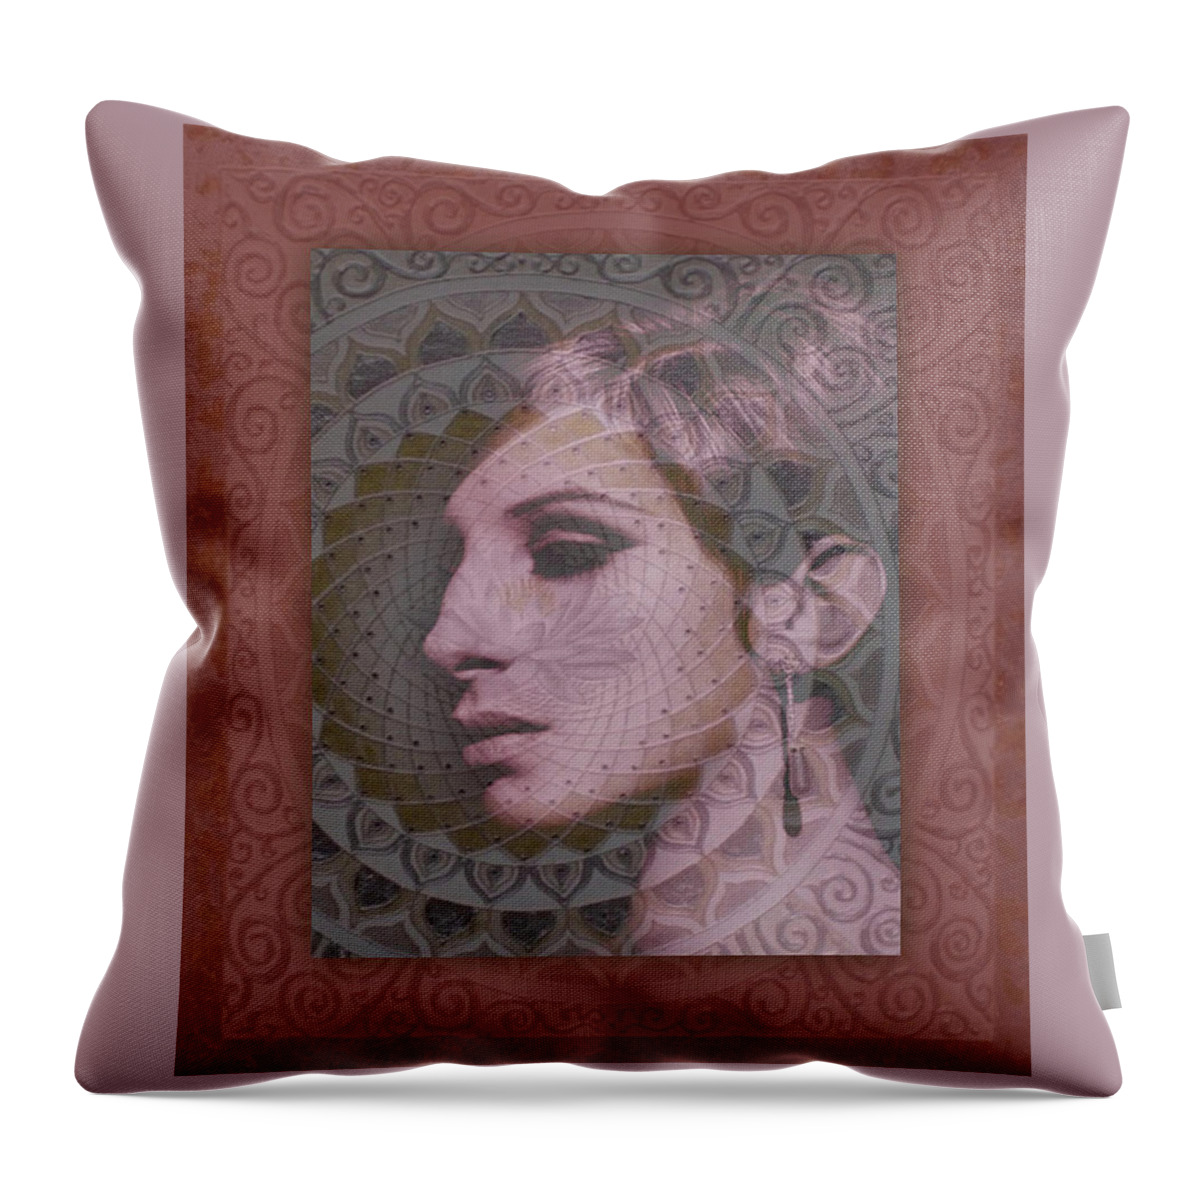  Throw Pillow featuring the digital art Barbra Streisand 111 by Richard Laeton